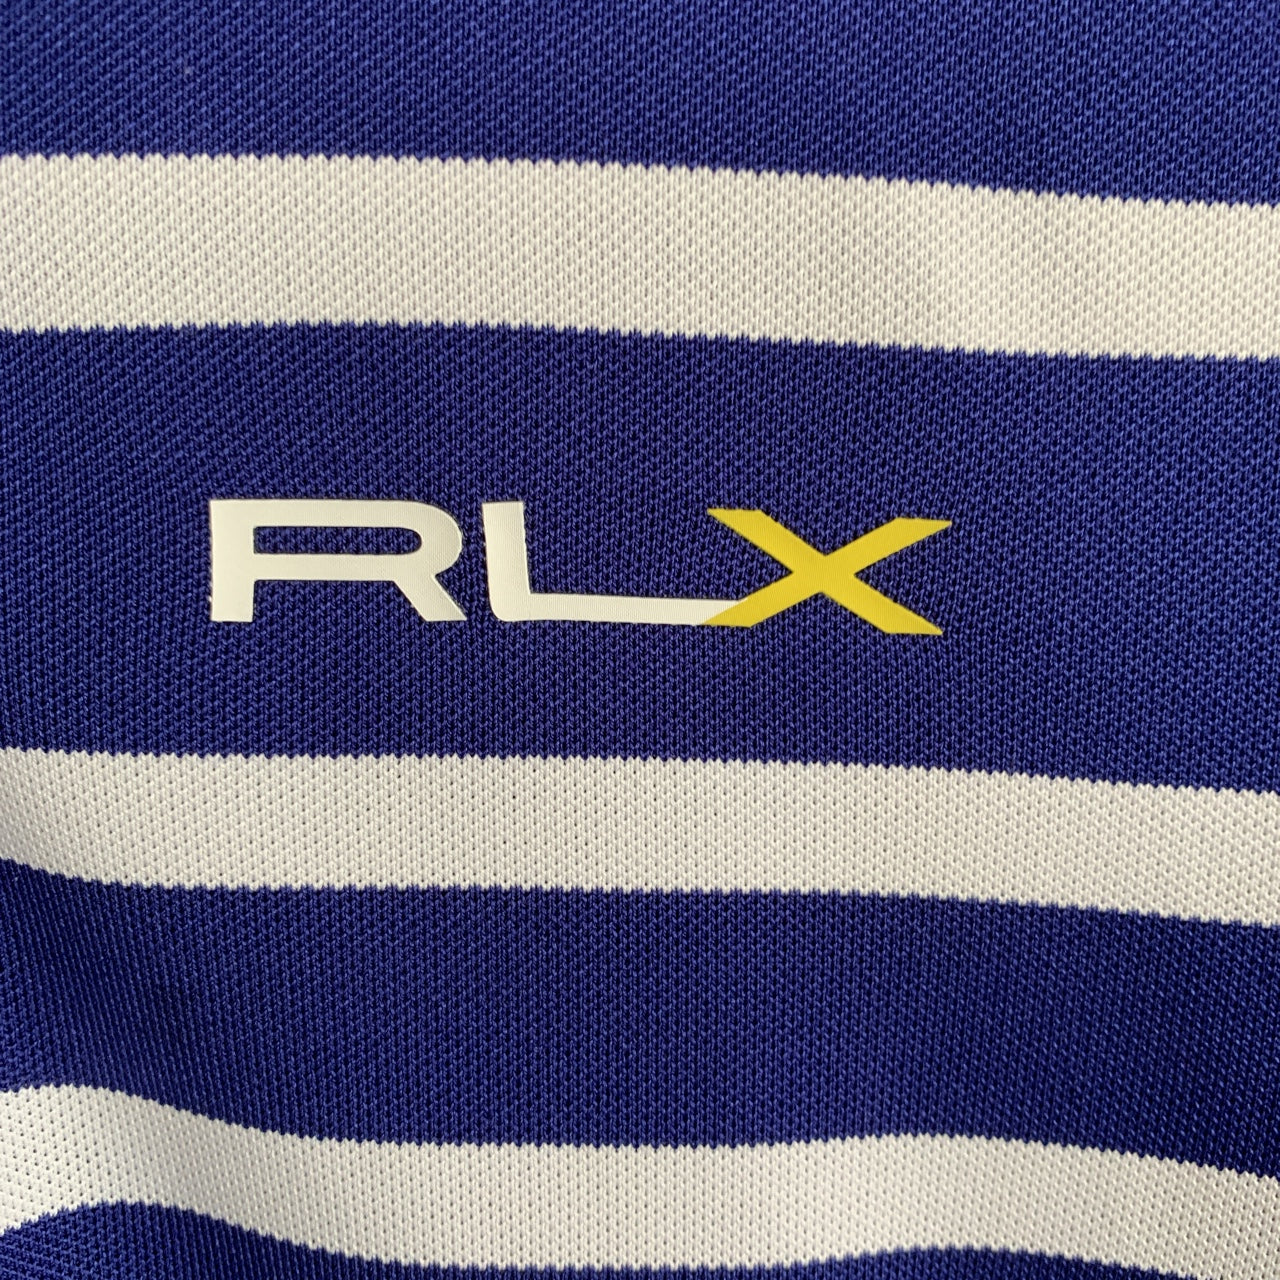 Ralph Lauren RLX Performance Polo Shirt Size Large